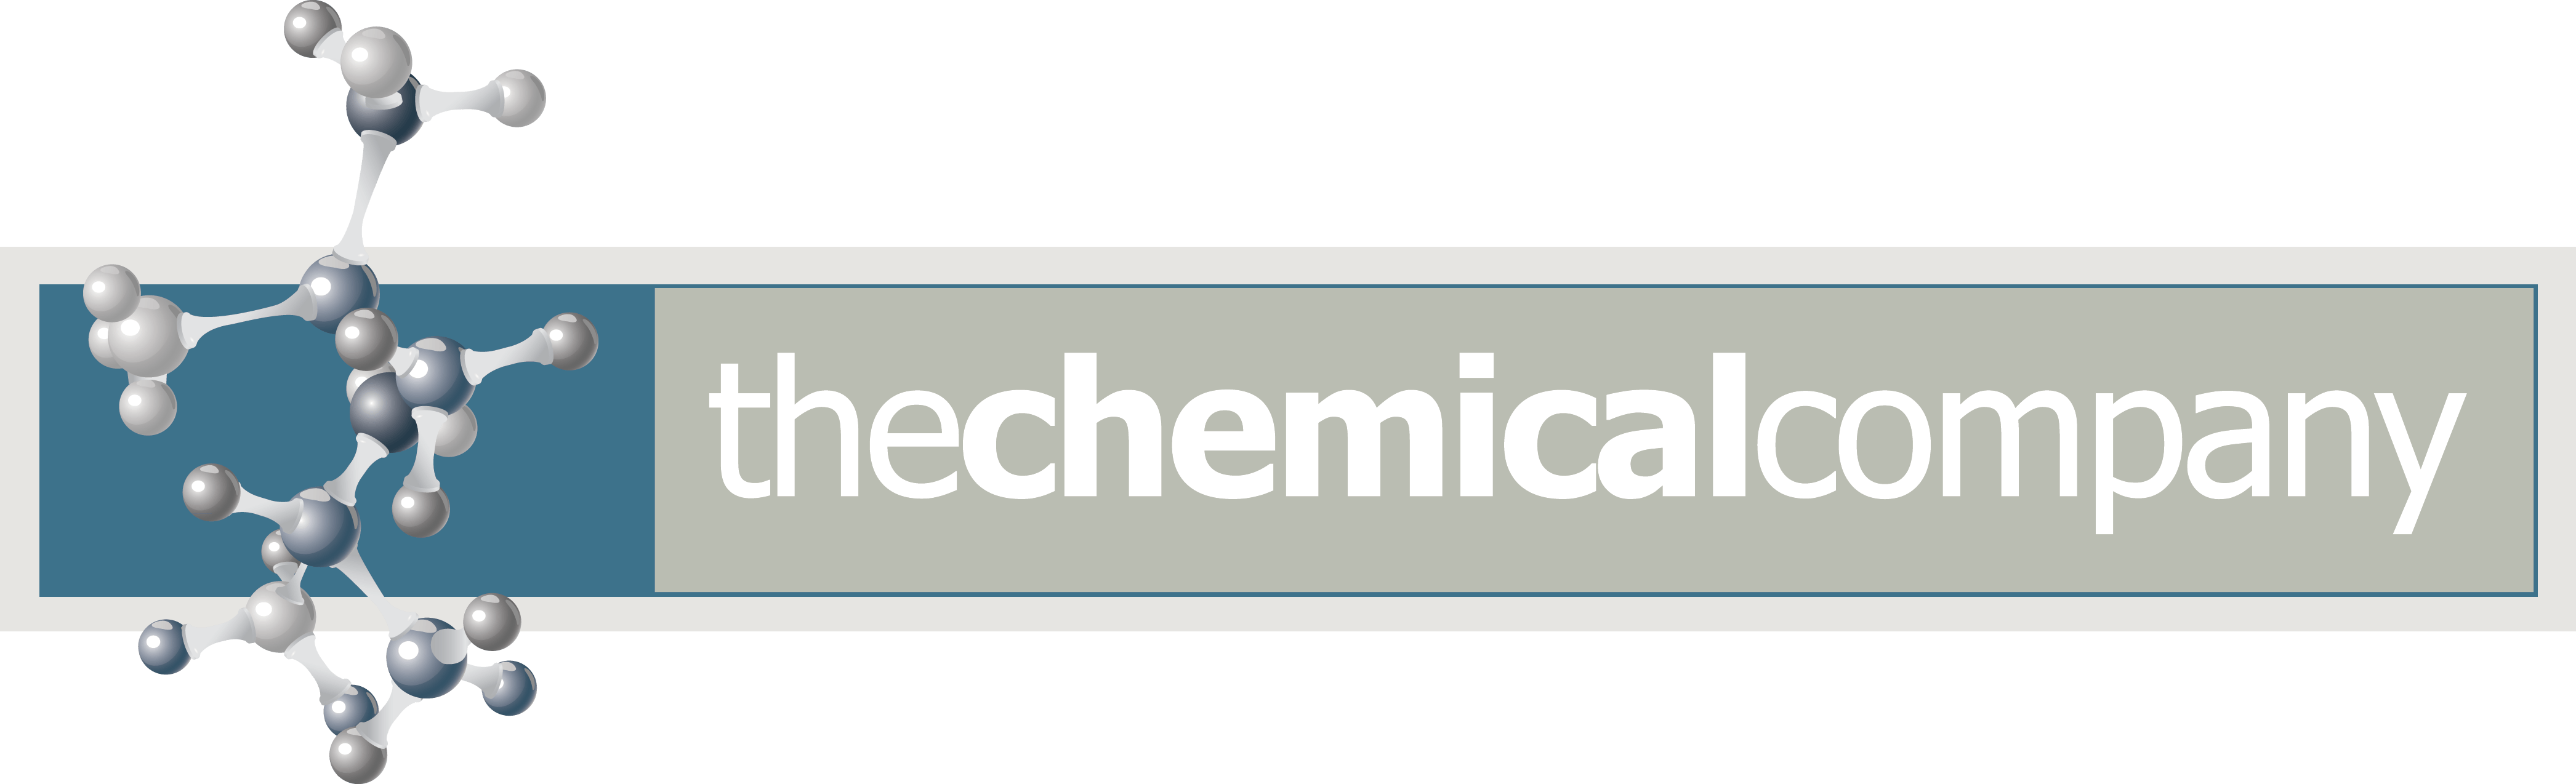 Chemical Company Logo - TCC logo - The Chemical Company